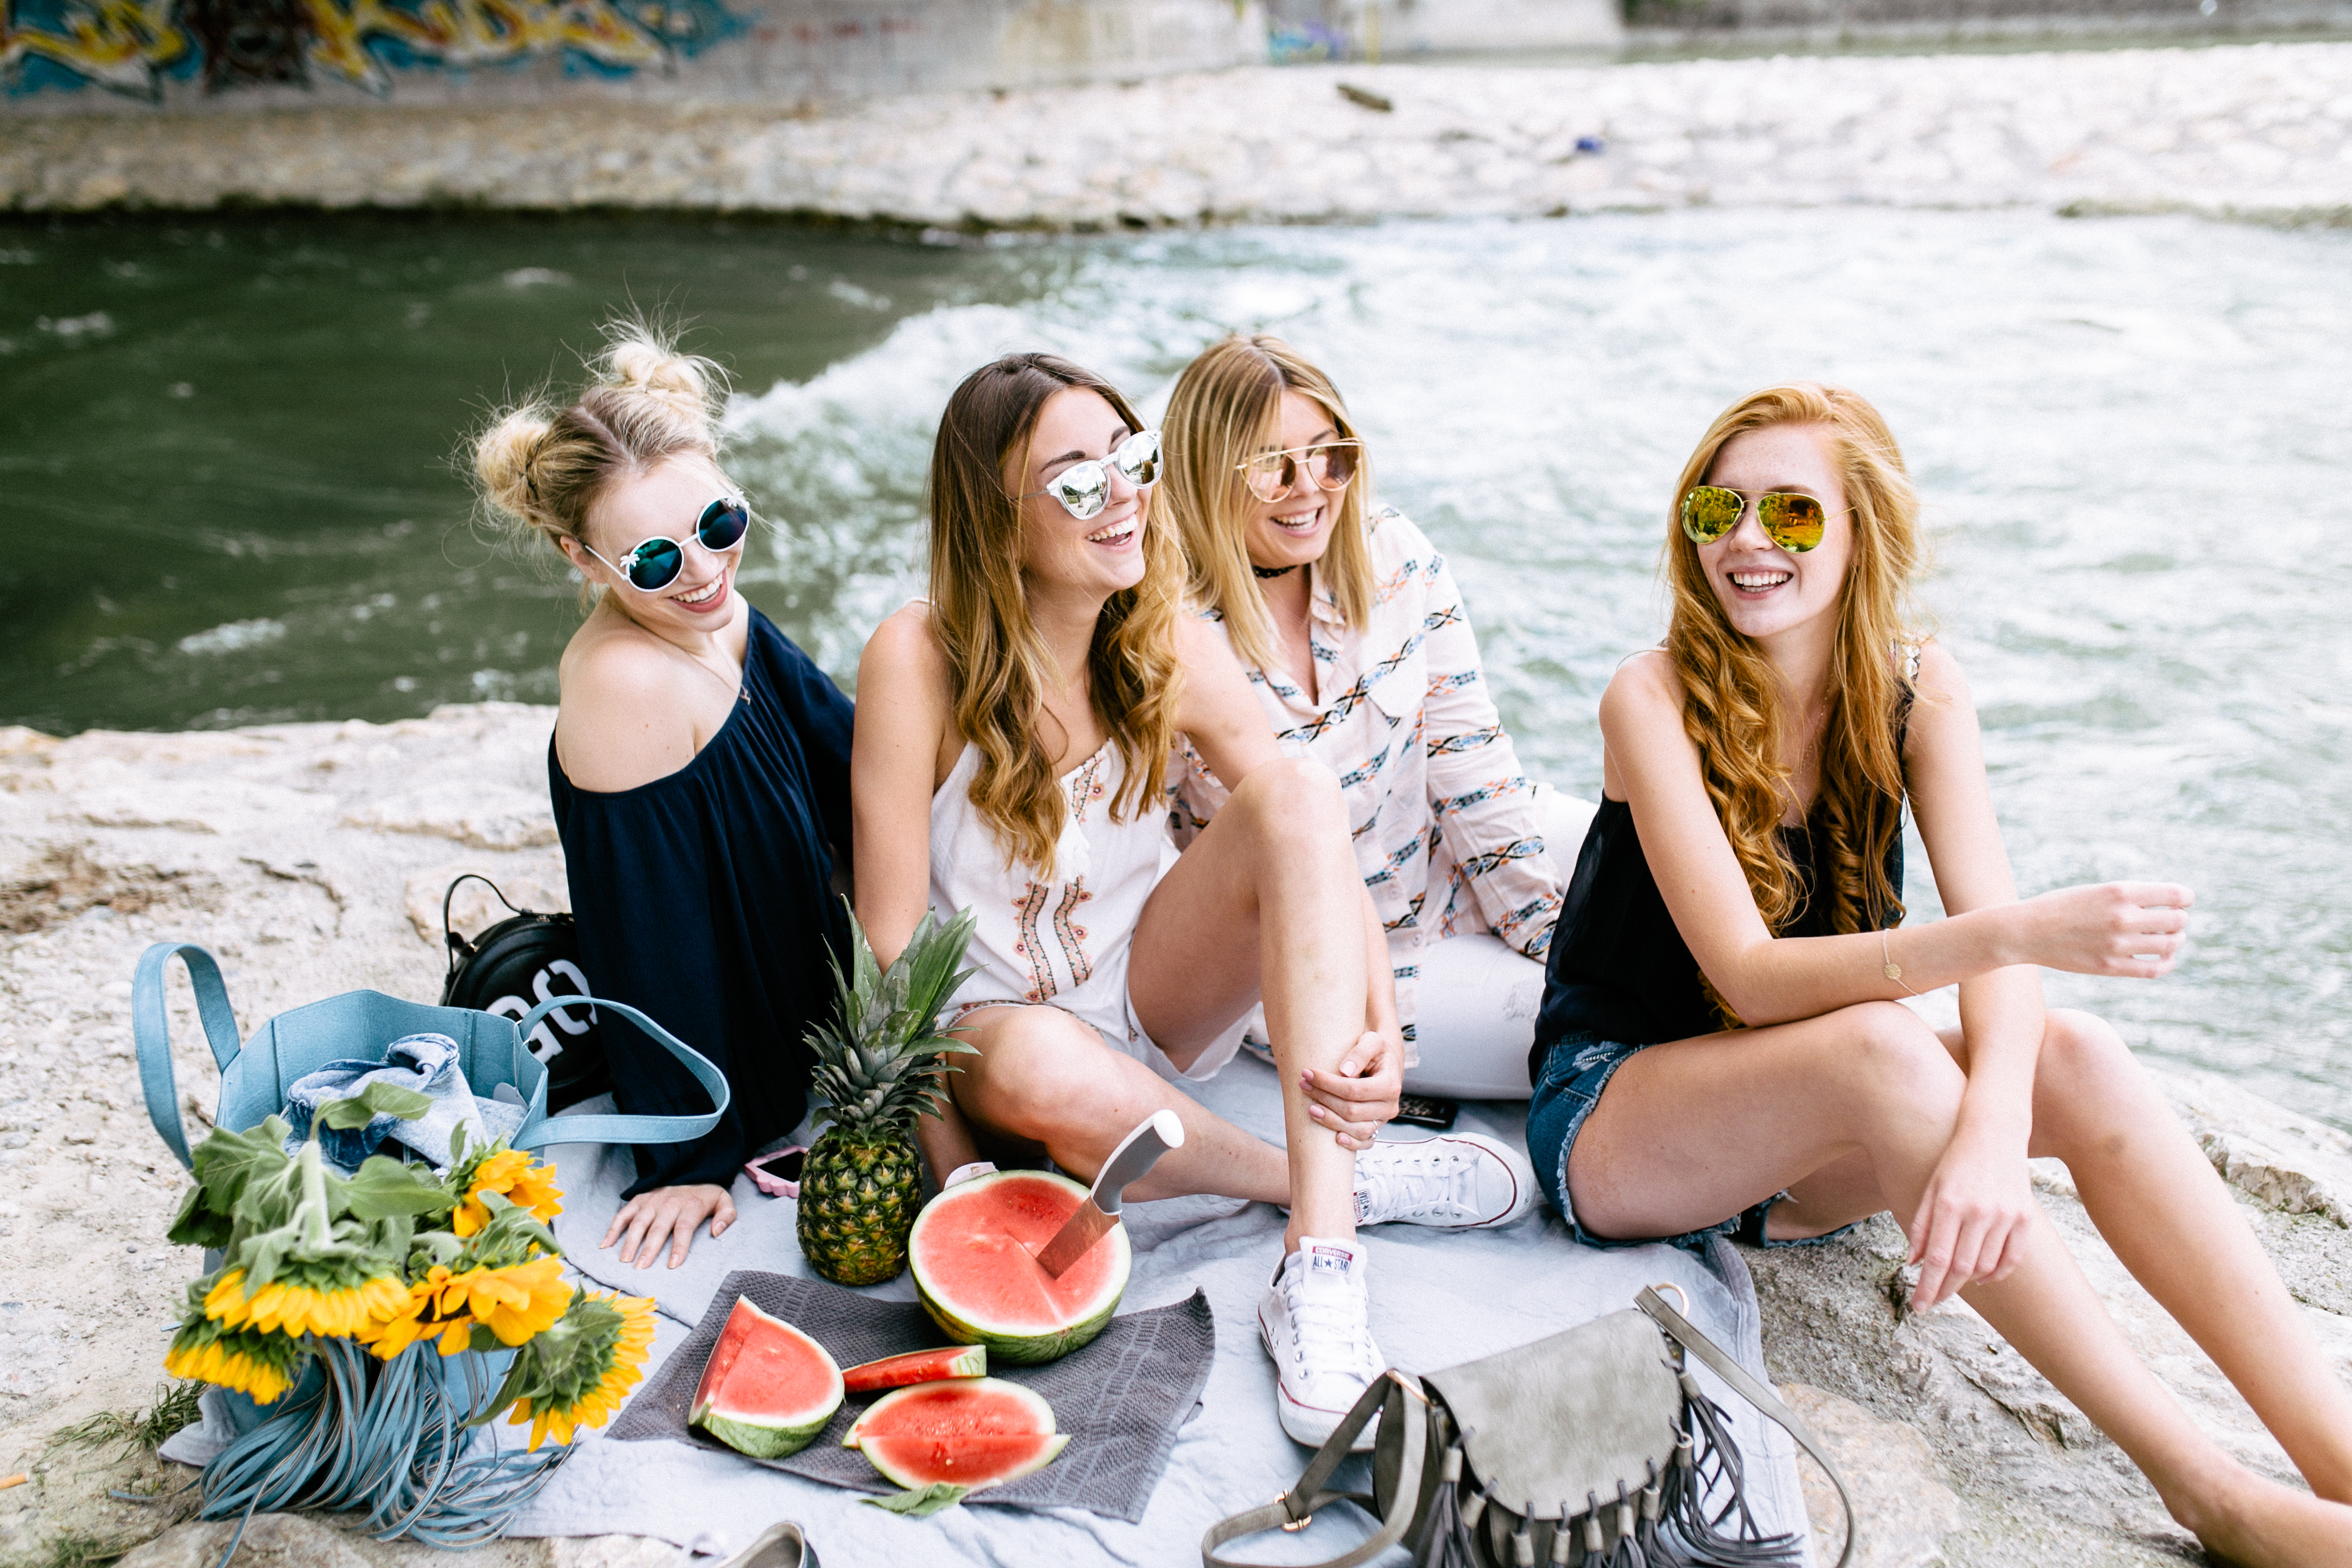 Franziska Elea deutsche Blogger Squad Mädels Picknick Wassermelone Ananas Sommer Outfits ootd Girls Freundinnen